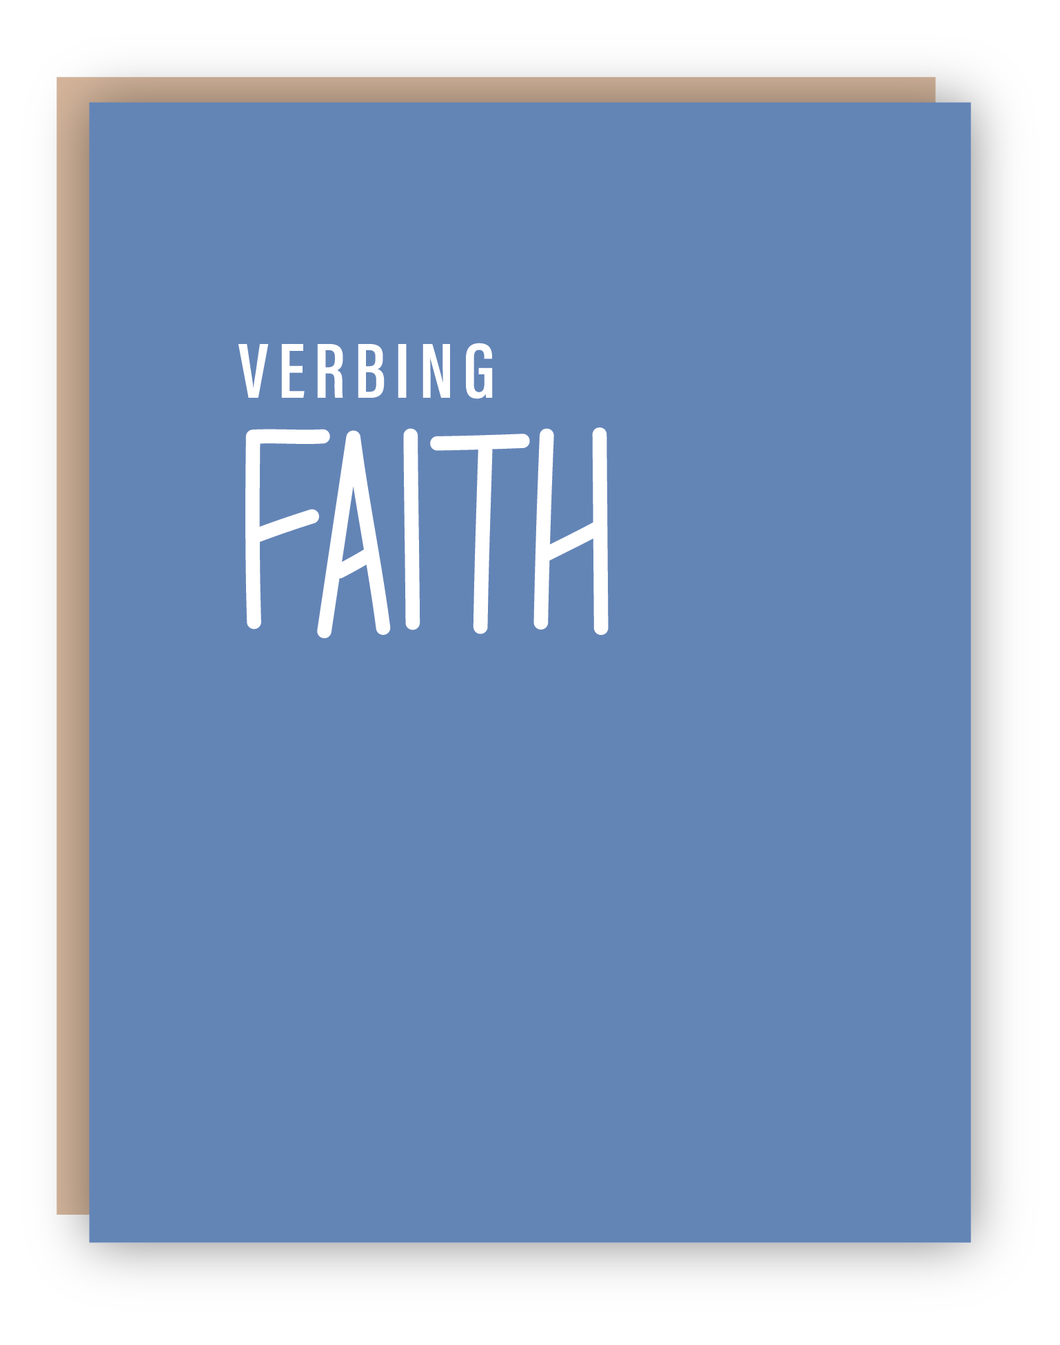 VERBING FAITH